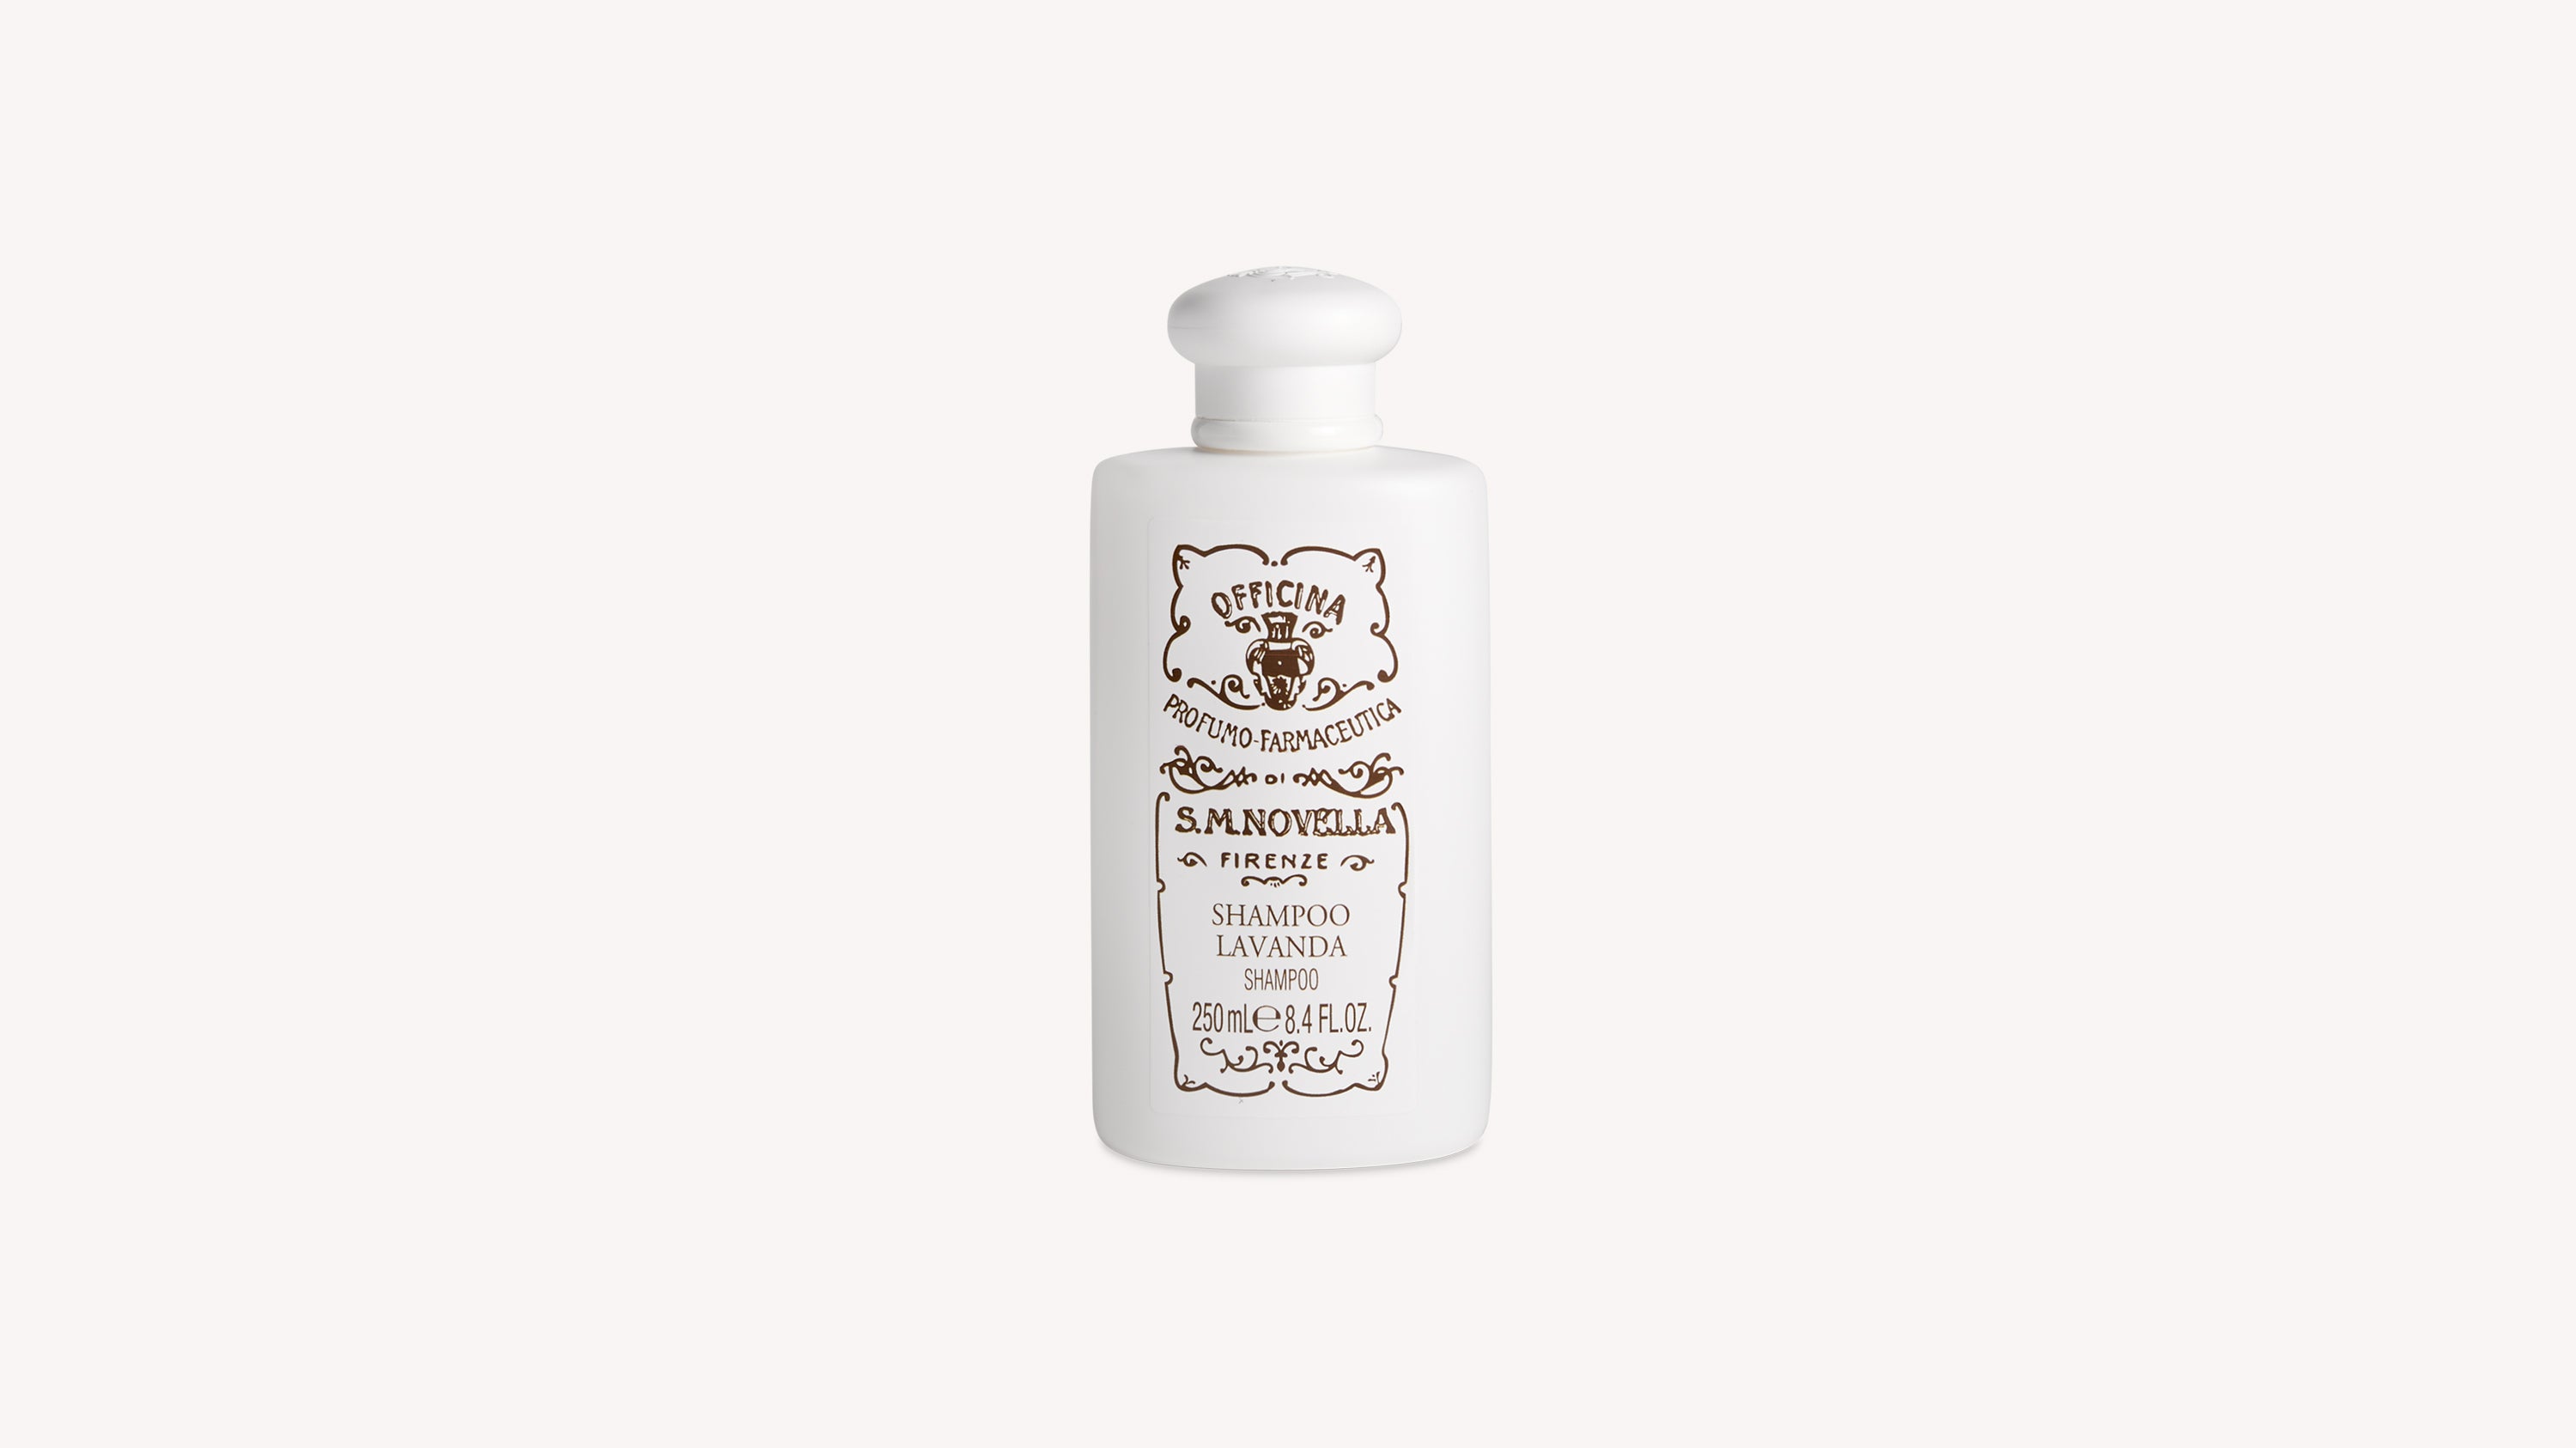 Lavanda Shampoo Body Care officina-smn-usa-ca.myshopify.com Officina Profumo Farmaceutica di Santa Maria Novella - US